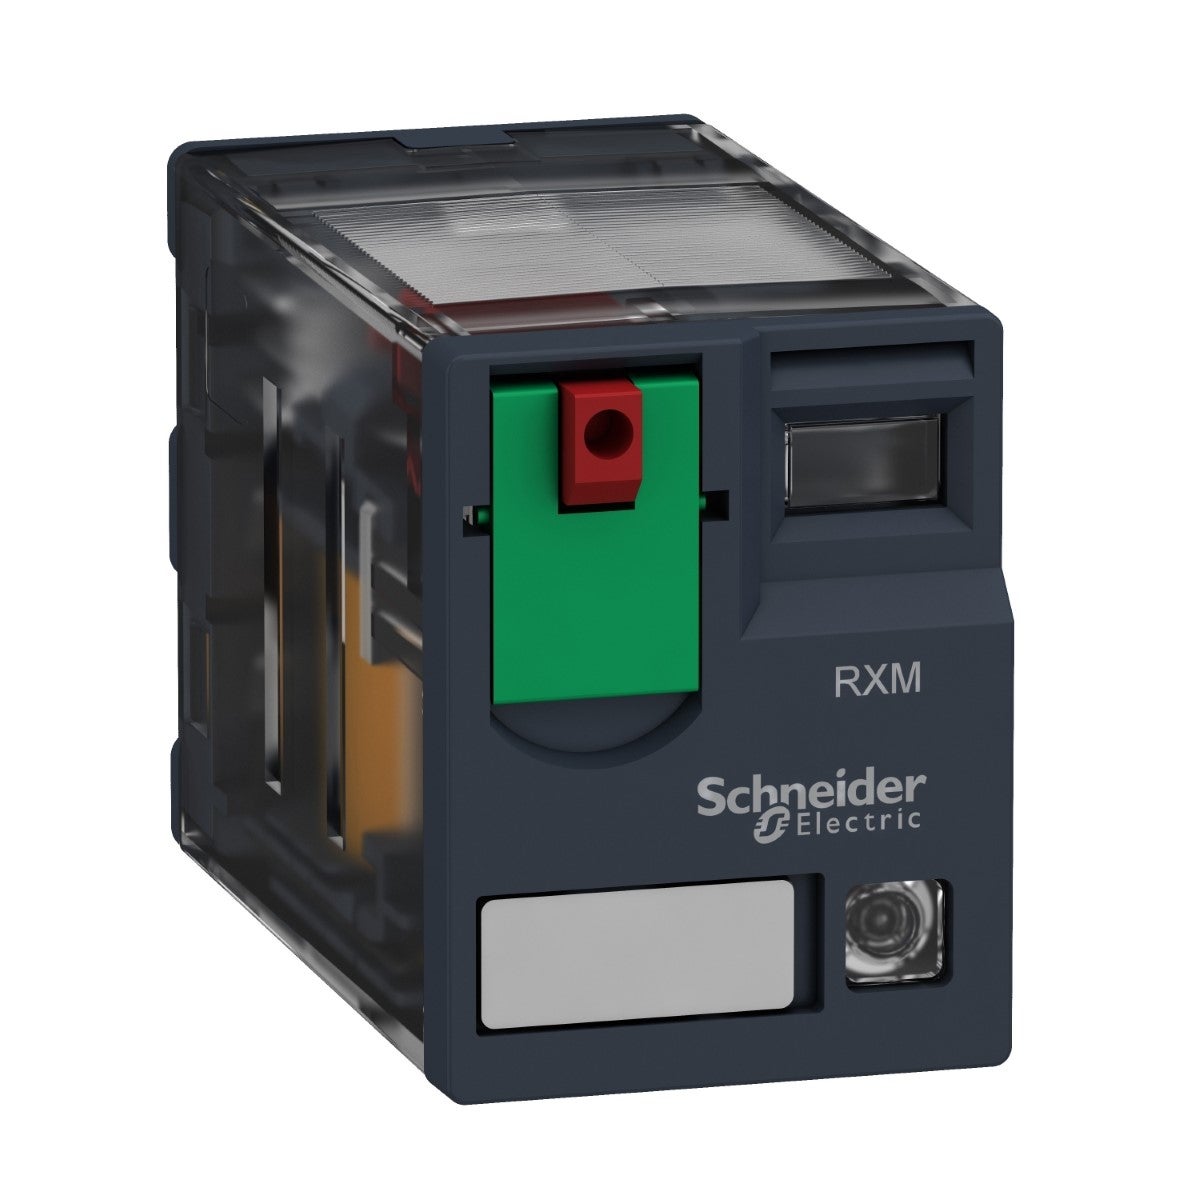 Schneider Electric Miniature Plug-in relay - Zelio RXM 2 C/O 120 V AC 12 A with LED